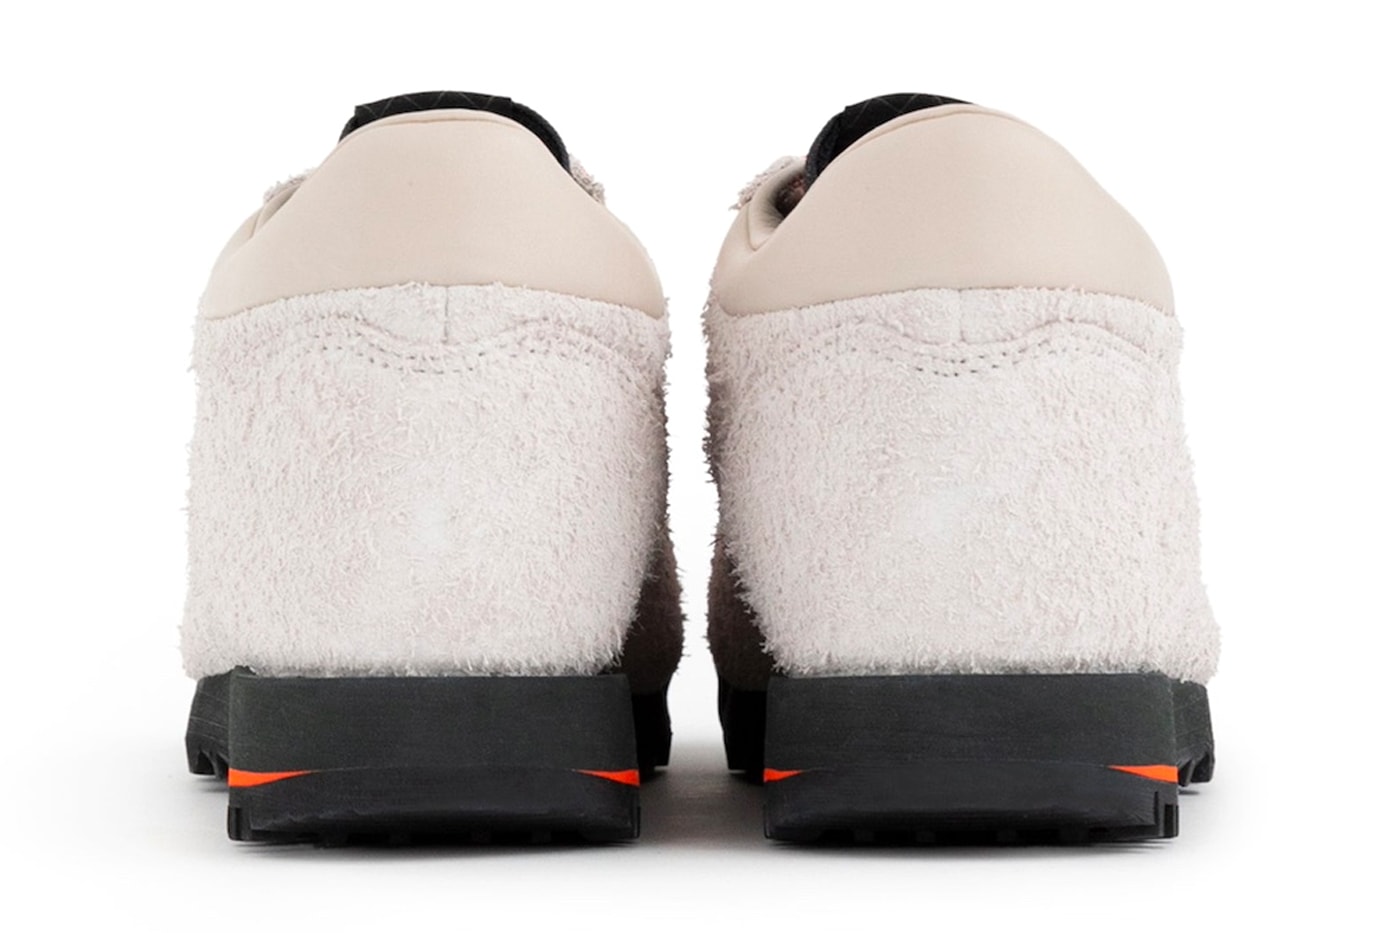 Aimé Leon Dore Drops New Balance Rainier Low Pack ald походные кроссовки замшевые и динамические походные ботинки Duo